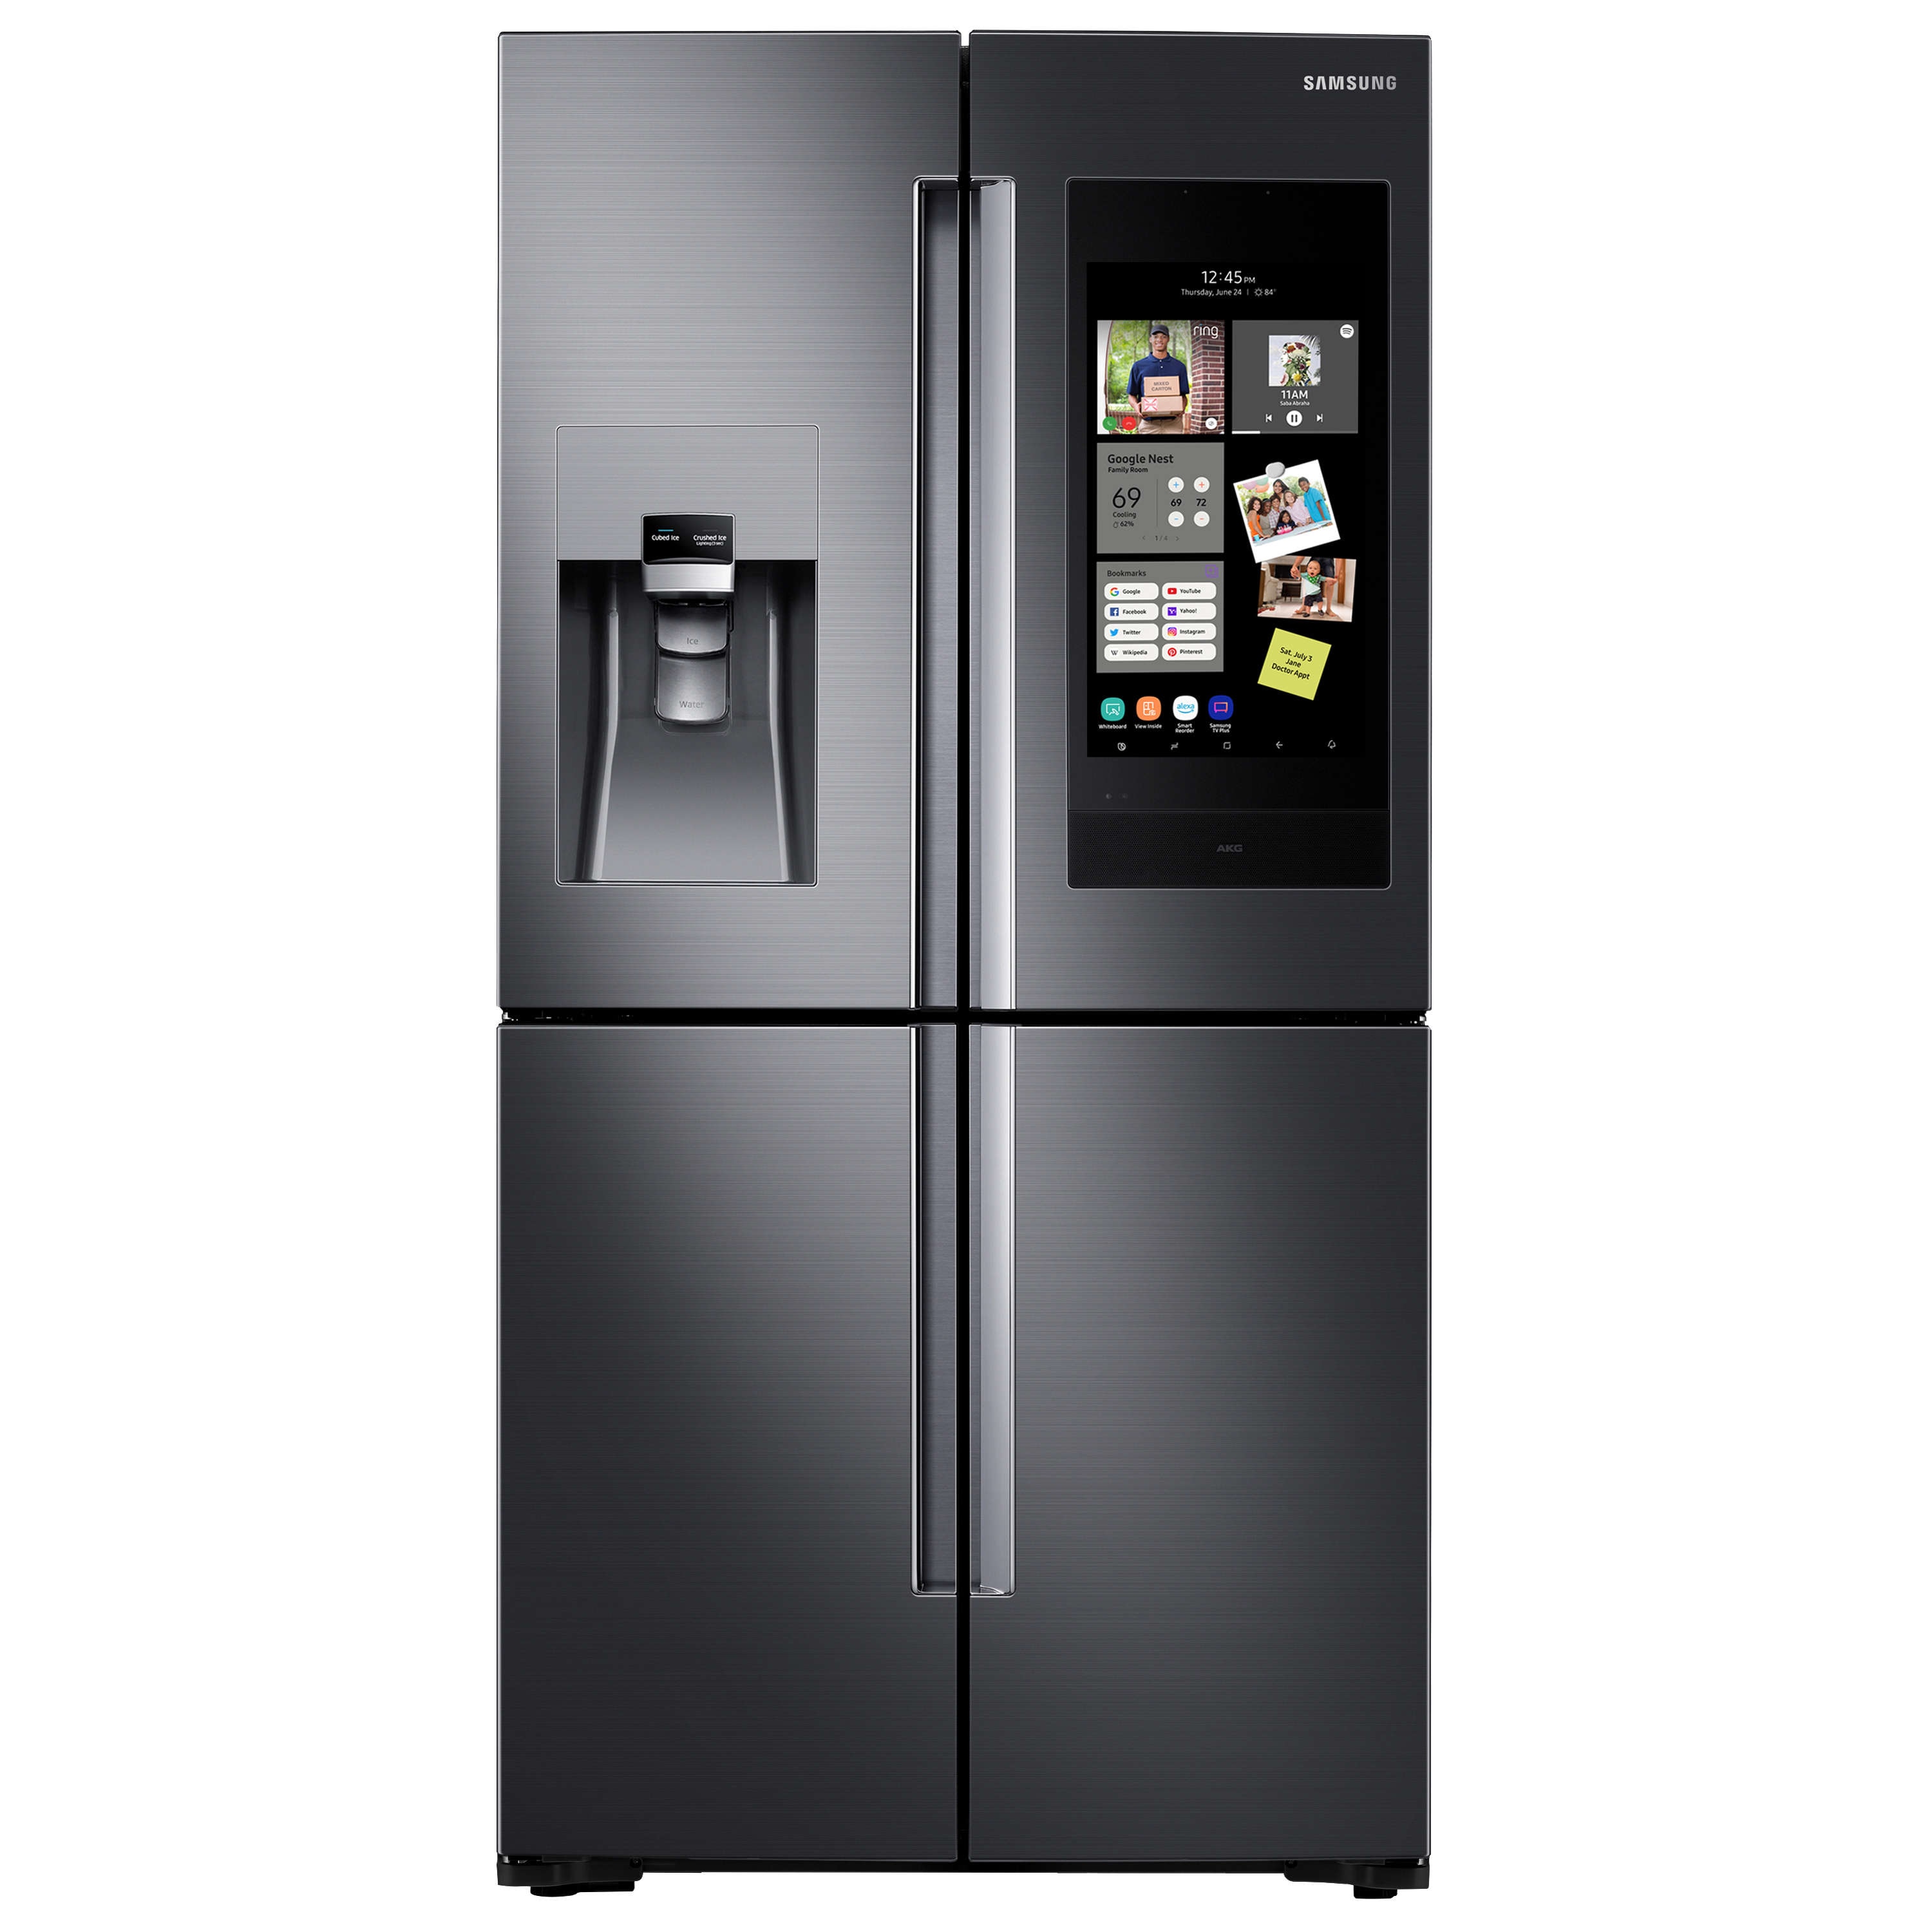 Smart Refrigerator Samsung Family Hub Frech Door w/TV - Appliances -  Hayward, California, Facebook Marketplace